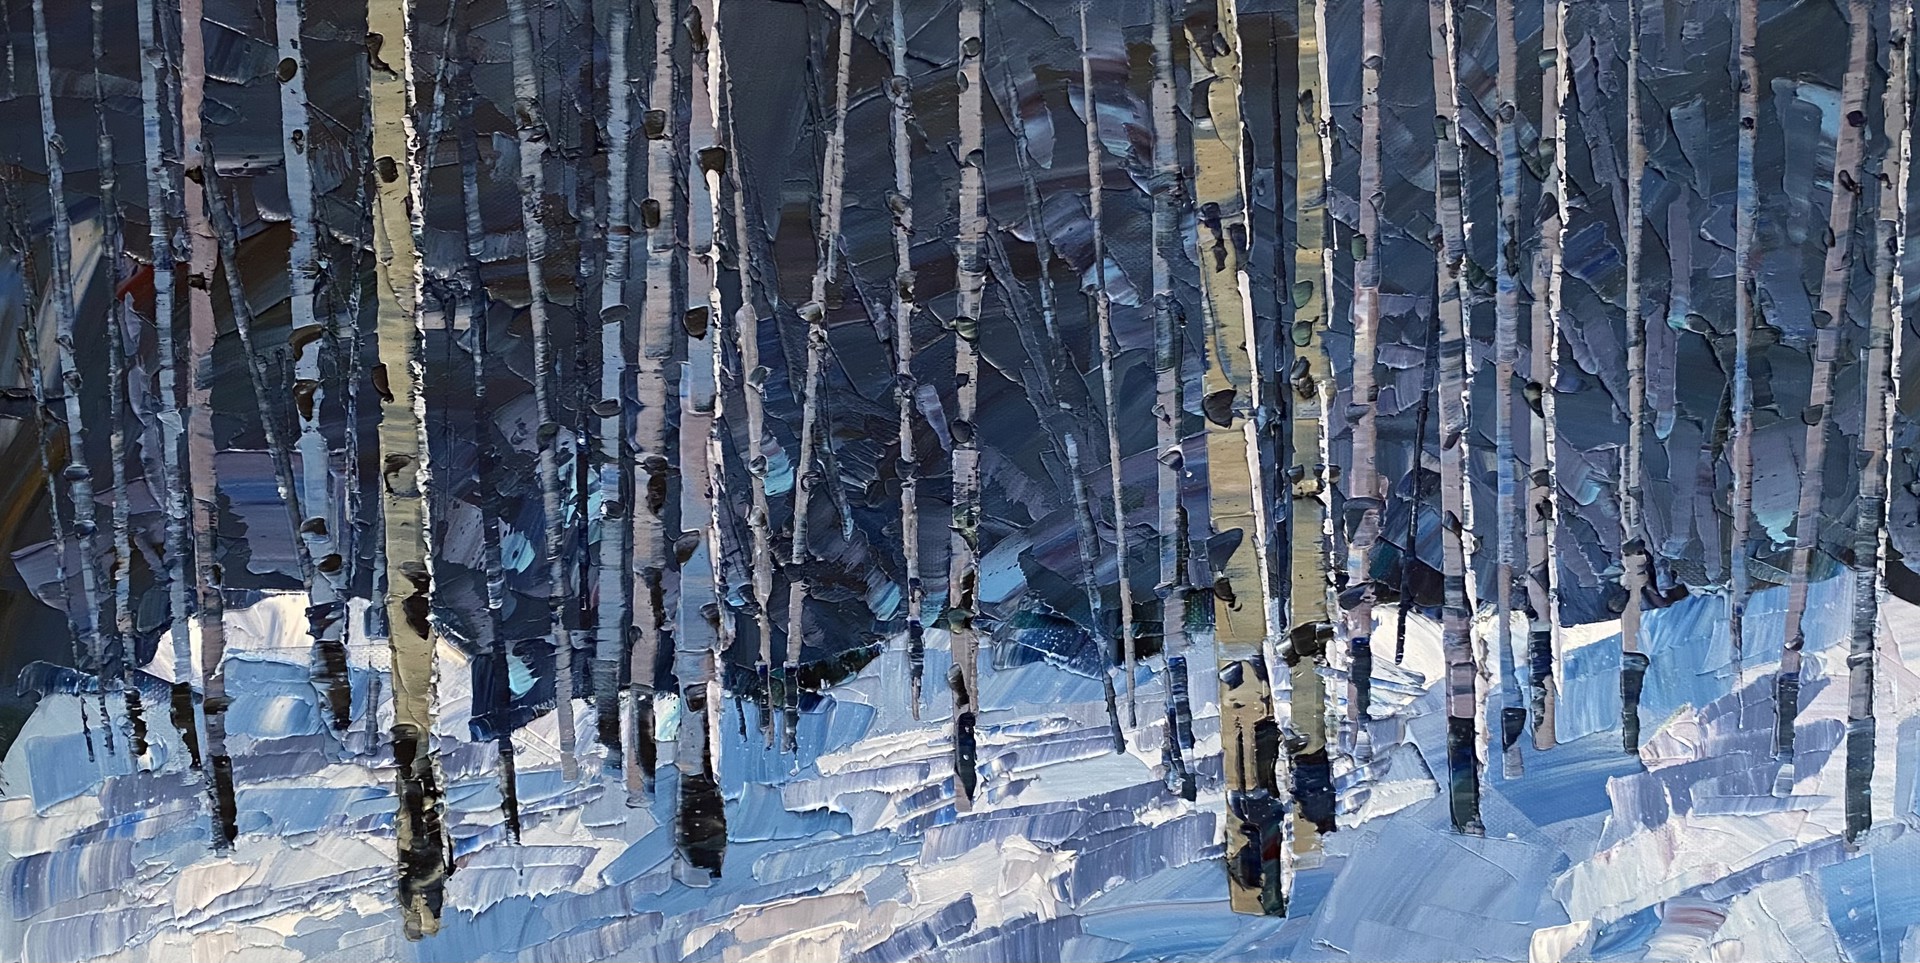 Snow Shadows by Jeff McKay